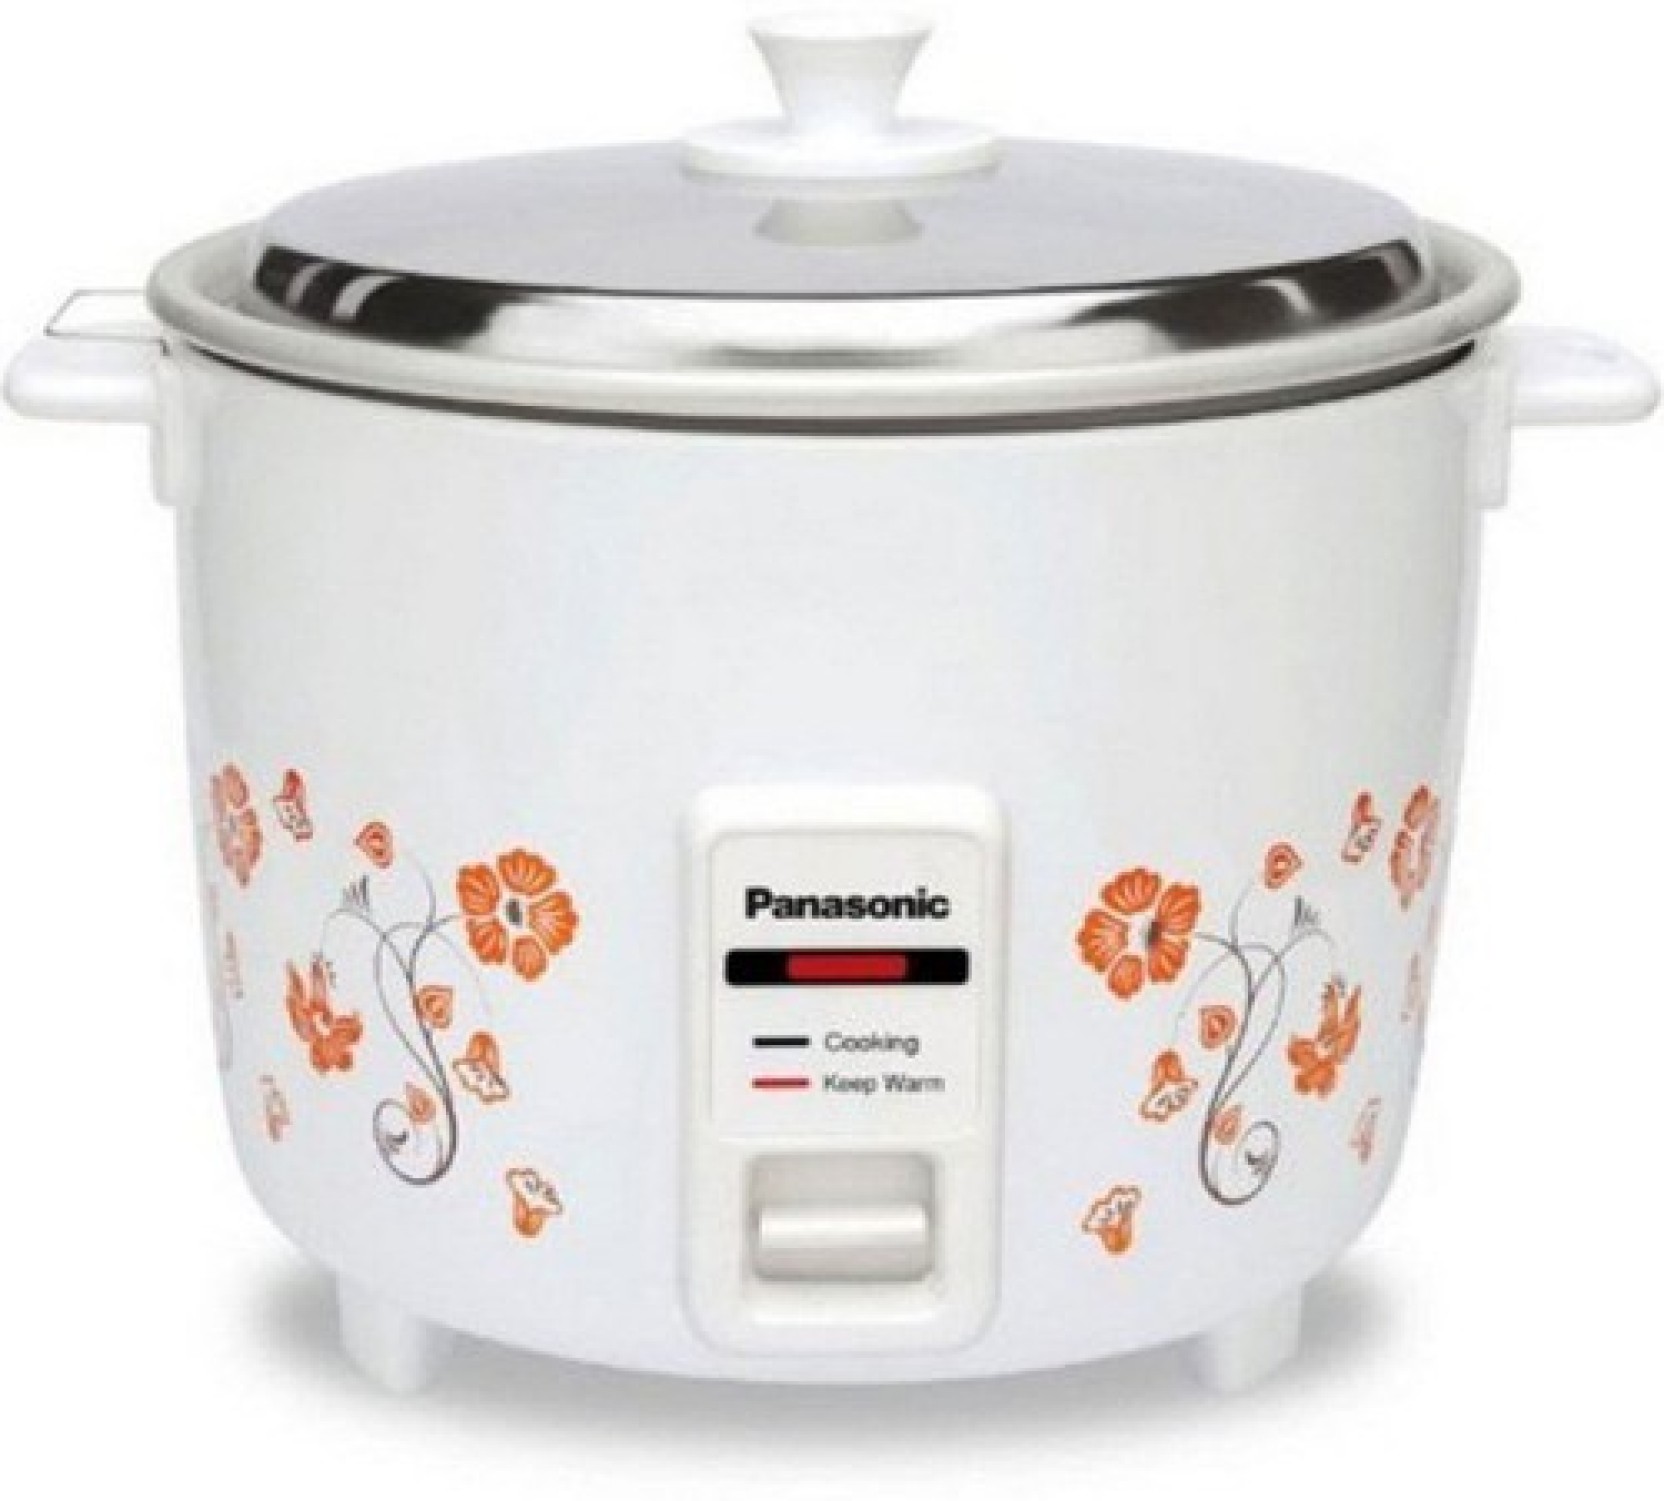 Panasonic SR-WA10H (E) Electric Rice Cooker Price in India - Buy ...